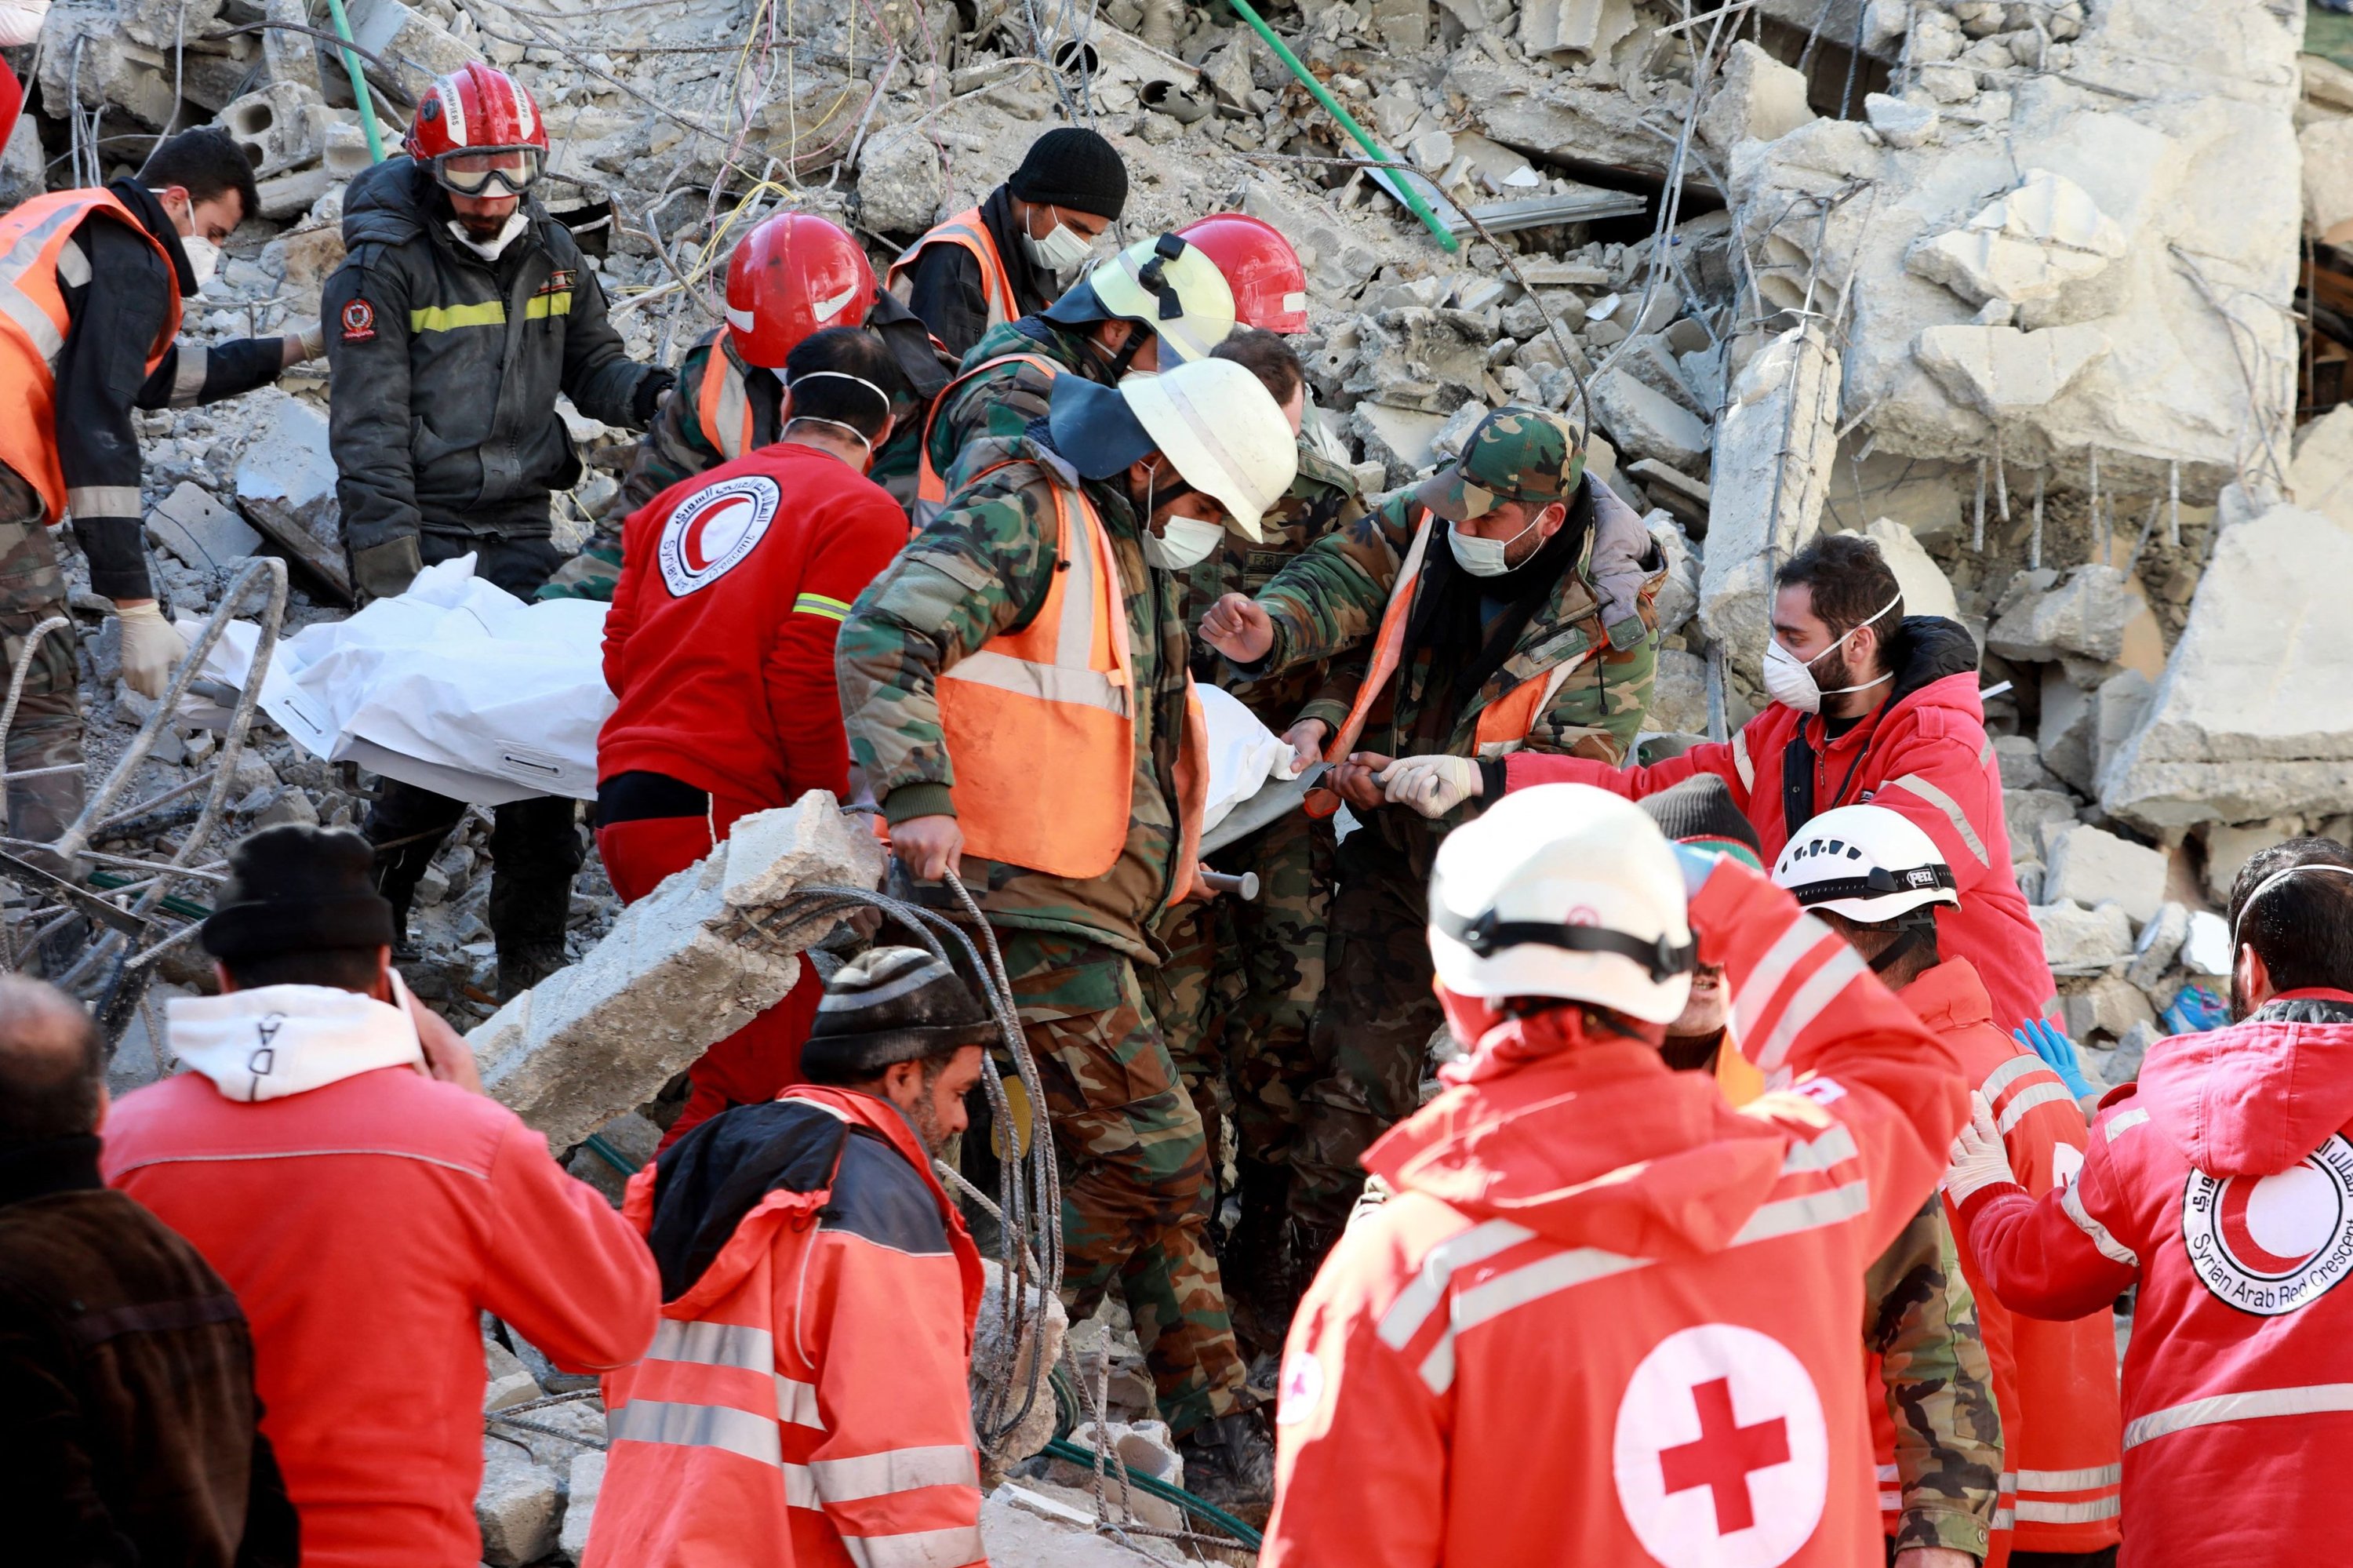 Anggota Palang Merah Lebanon membawa jenazah seorang korban dengan tandu yang diambil dari puing-puing bangunan yang runtuh, Damaskus, Suriah, 9 Februari 2023. (Foto AFP)